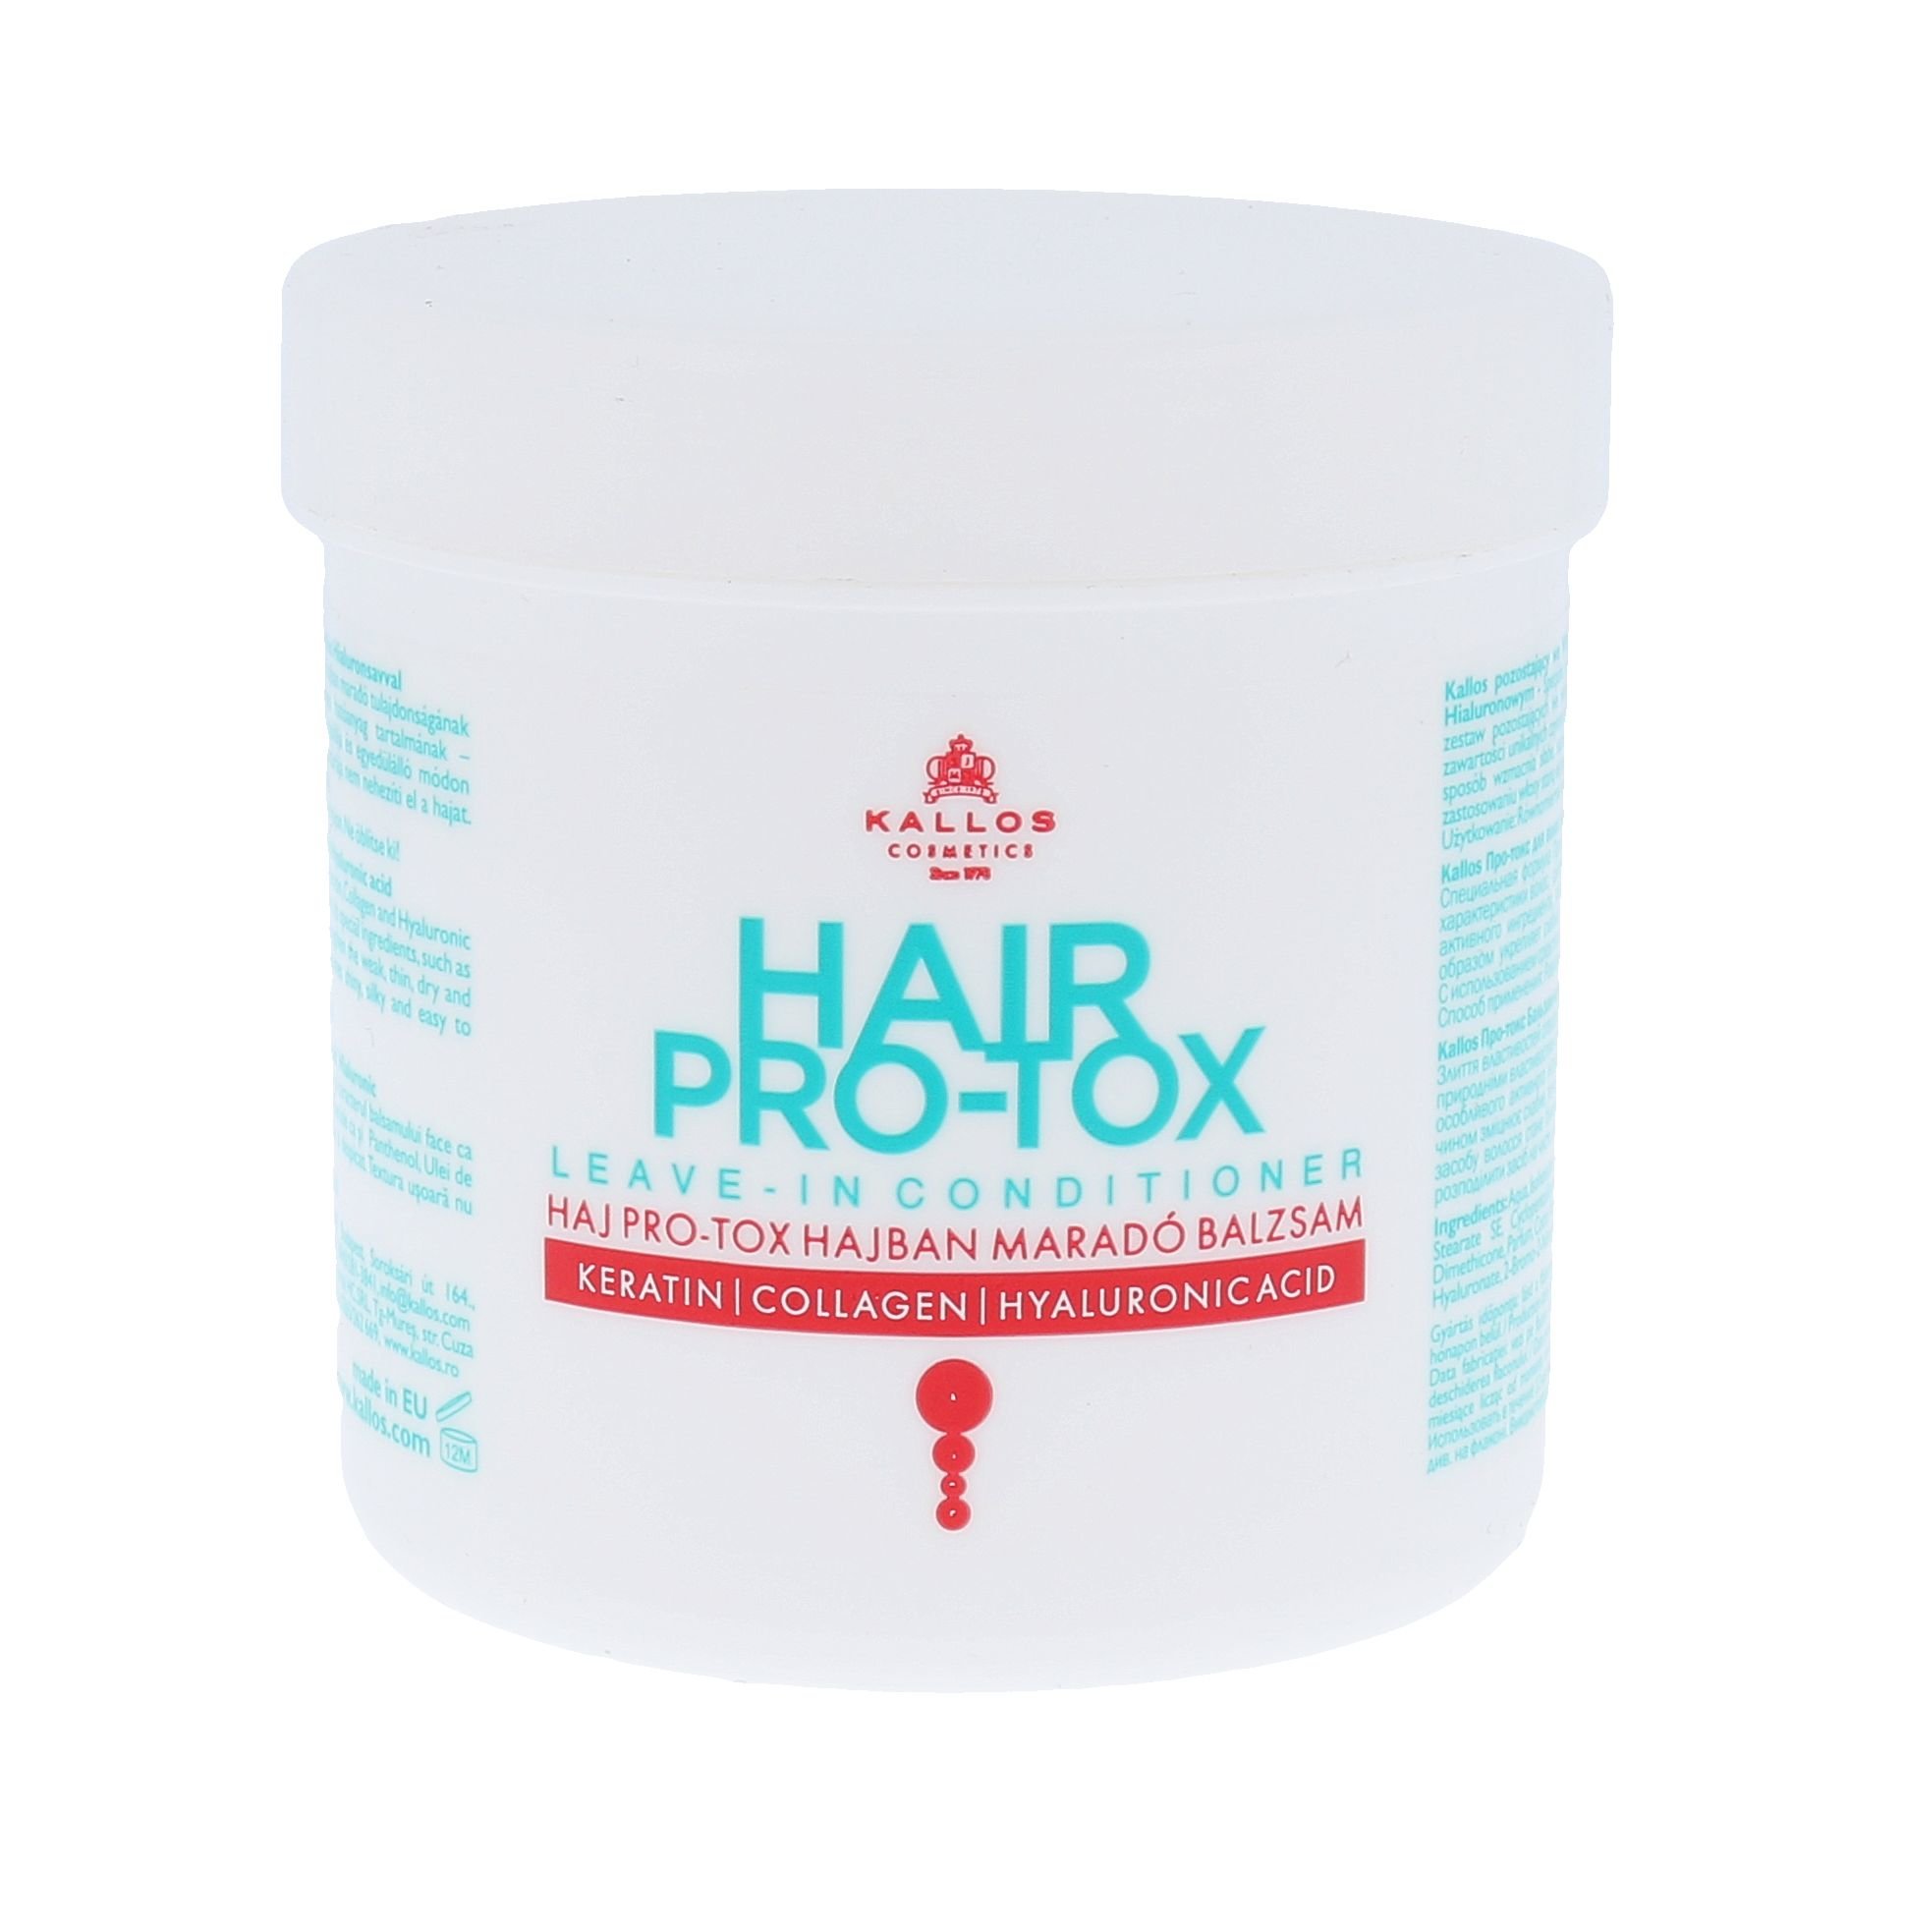 Kallos Cosmetics Hair Pro-Tox Leave-In Conditioner 250ml kondicionierius